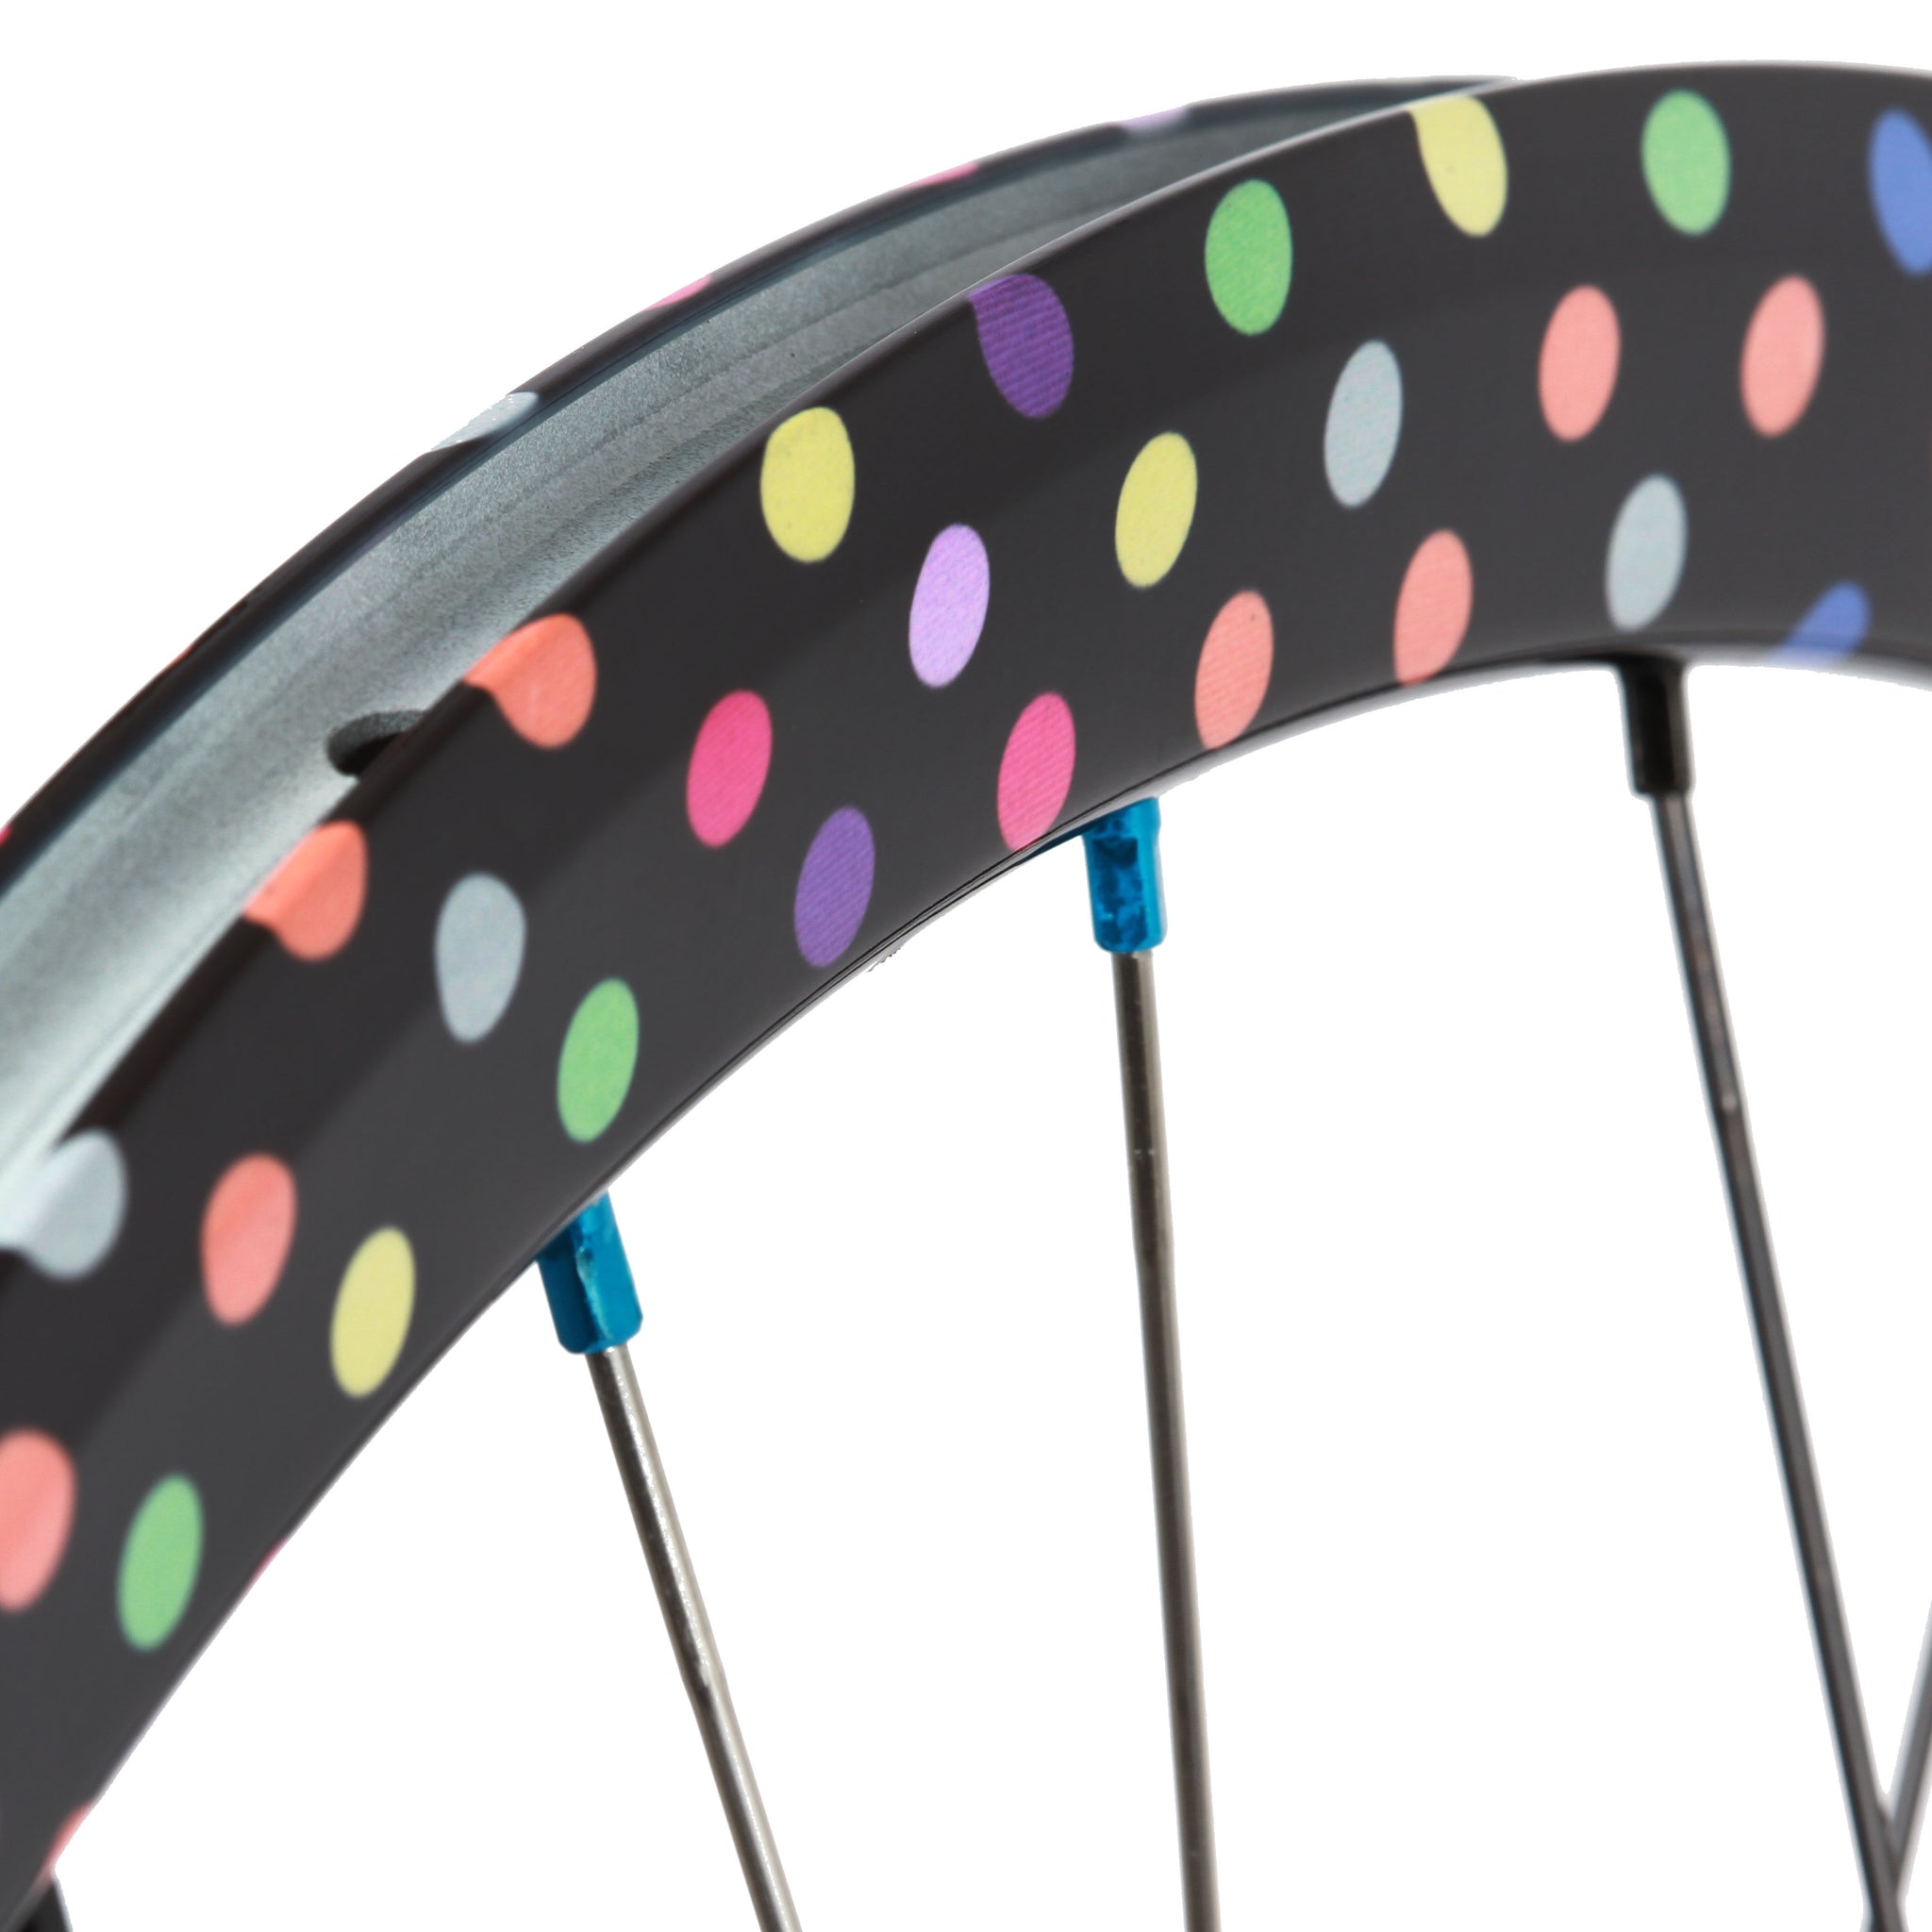 Velocity Deep V/NOS Gran Compe wheelset - polka dot & blue - Retrogression Fixed Gear